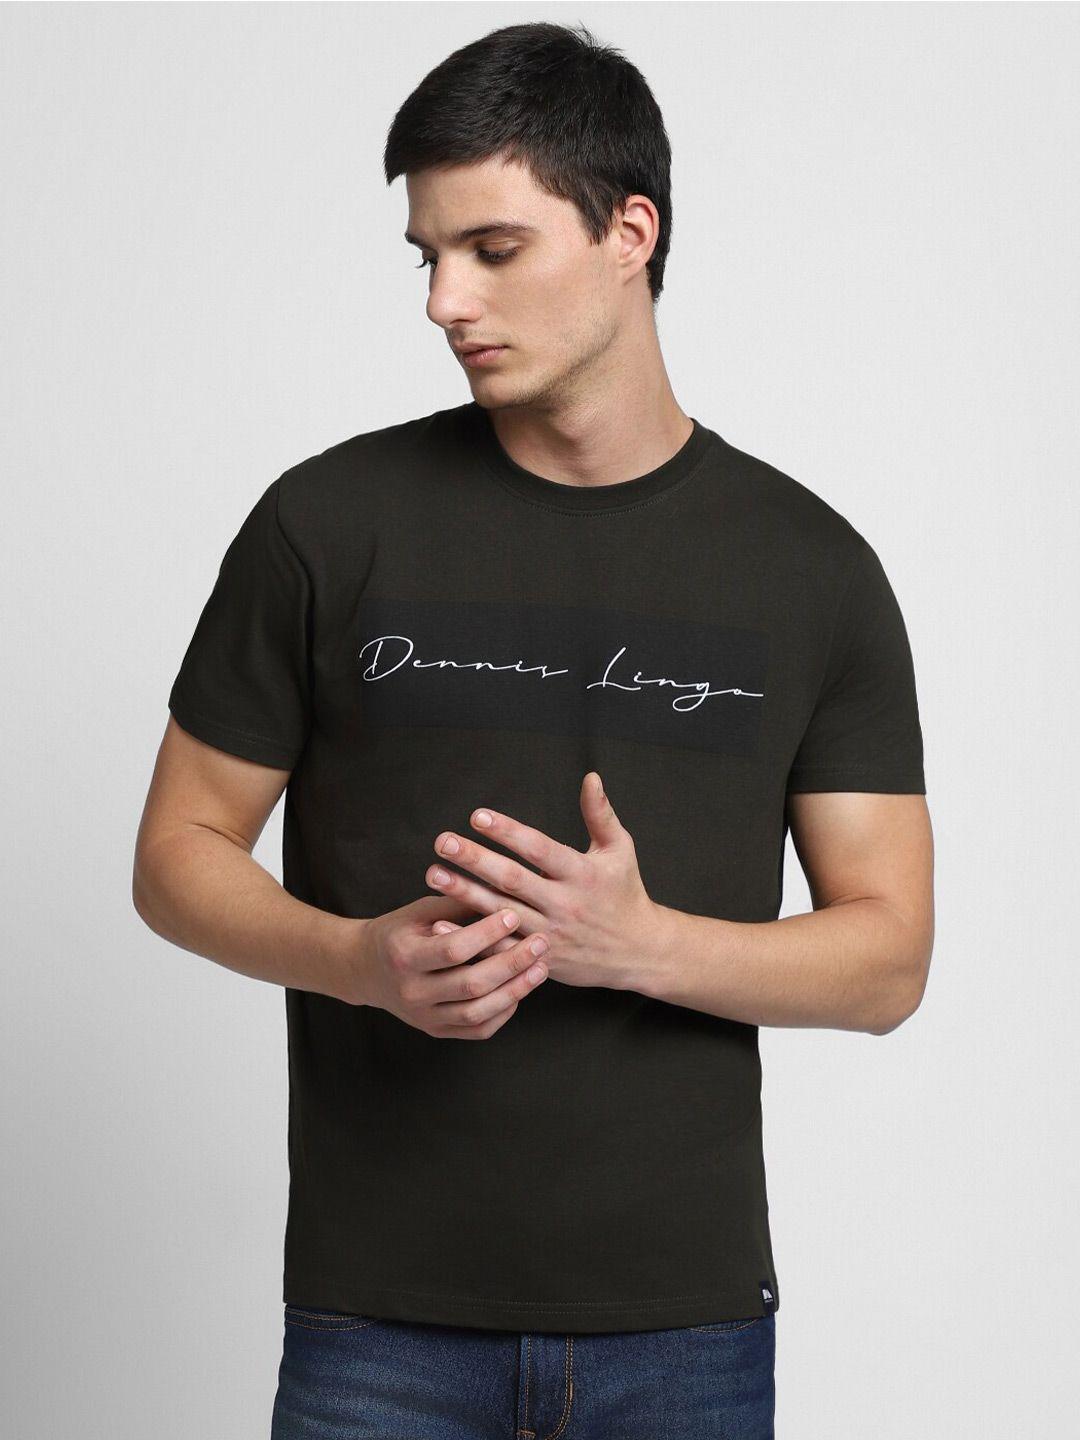 dennis lingo printed slim fit cotton t-shirt